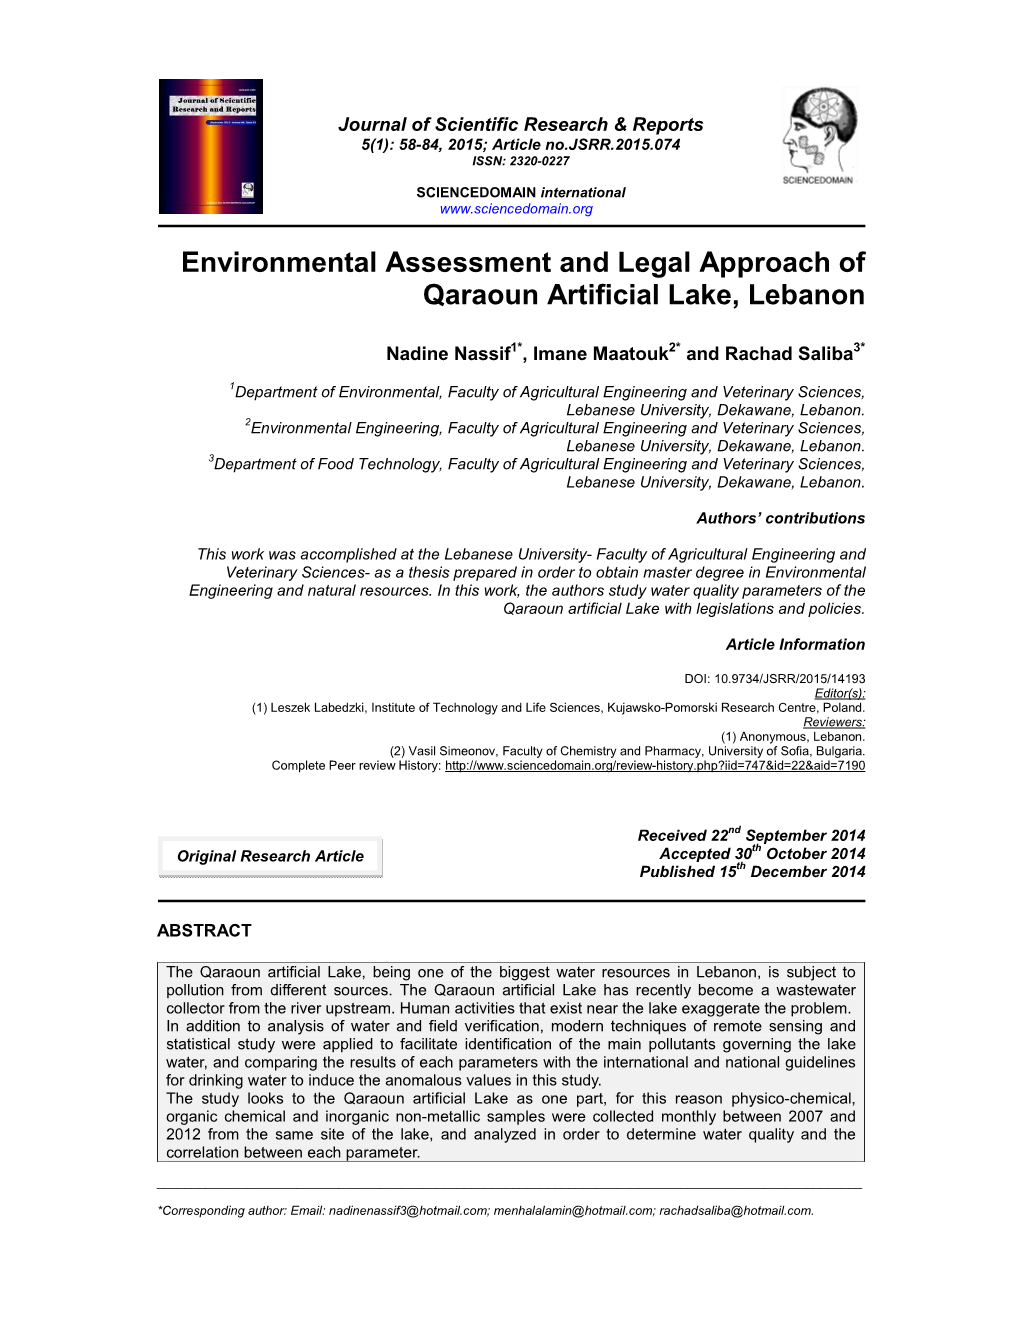 Environmental Assessment and Legal Approach of Qaraoun Artificial Lake, Lebanon